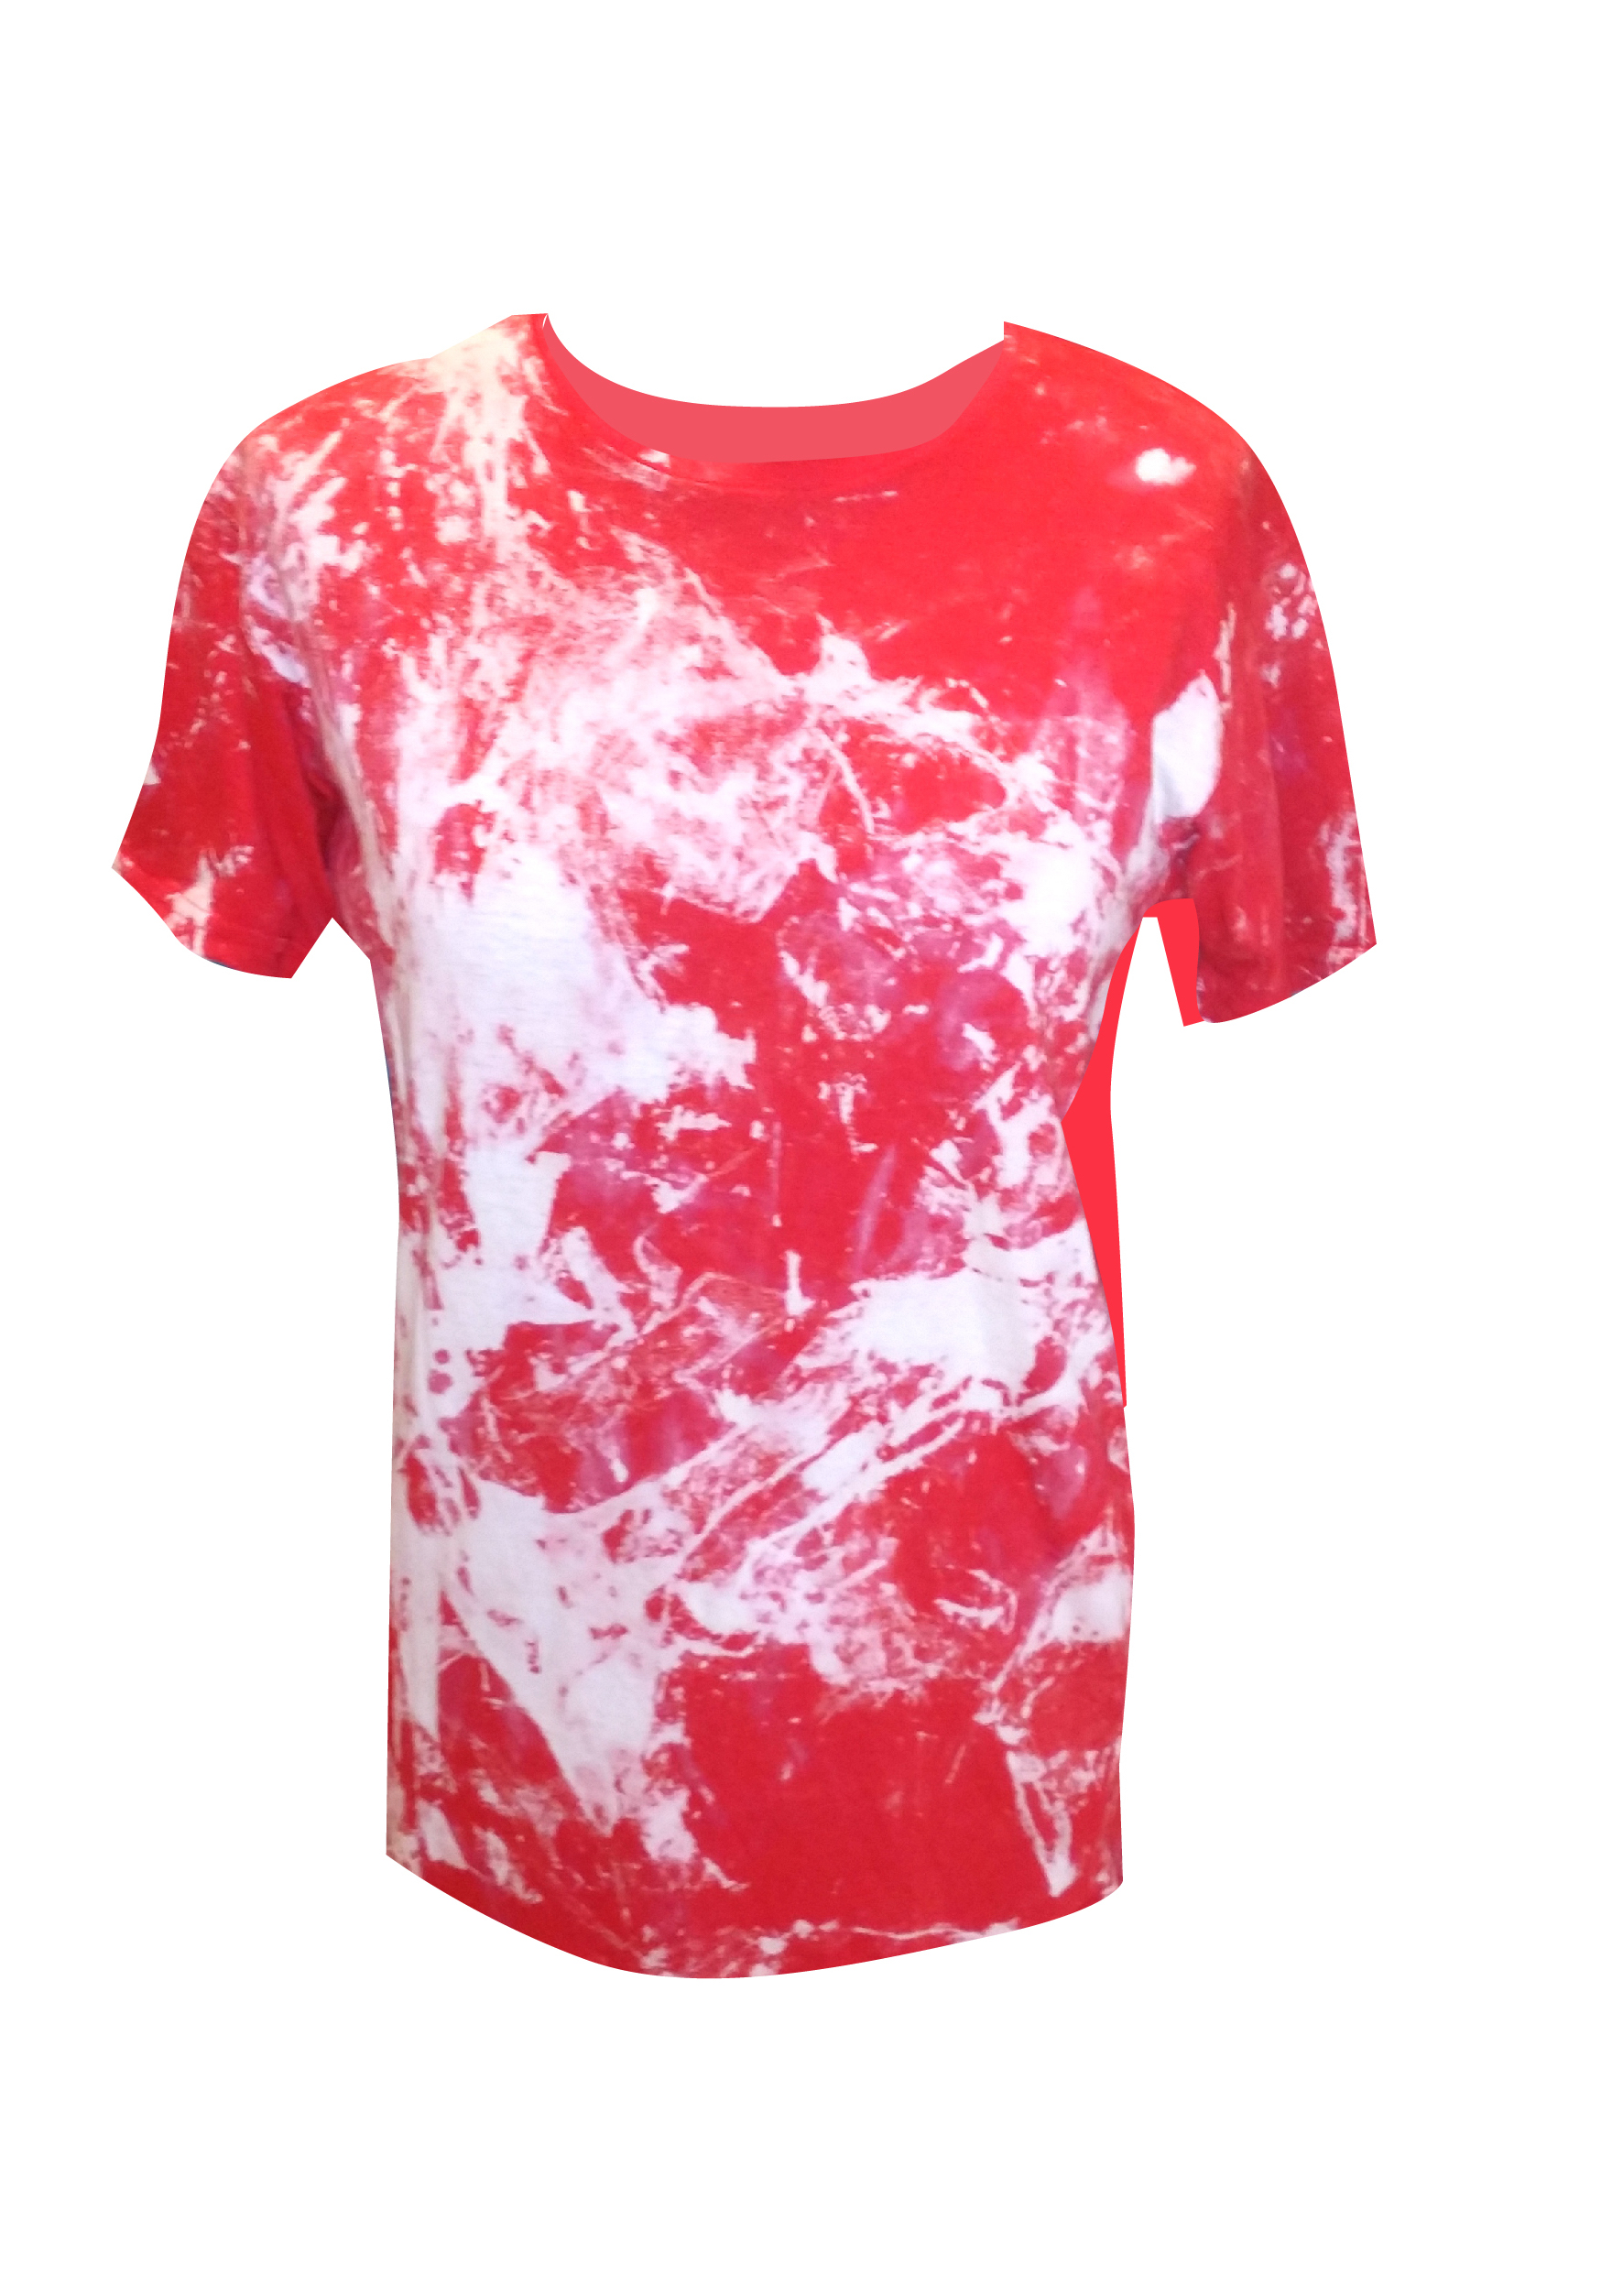 acid wash red shirt